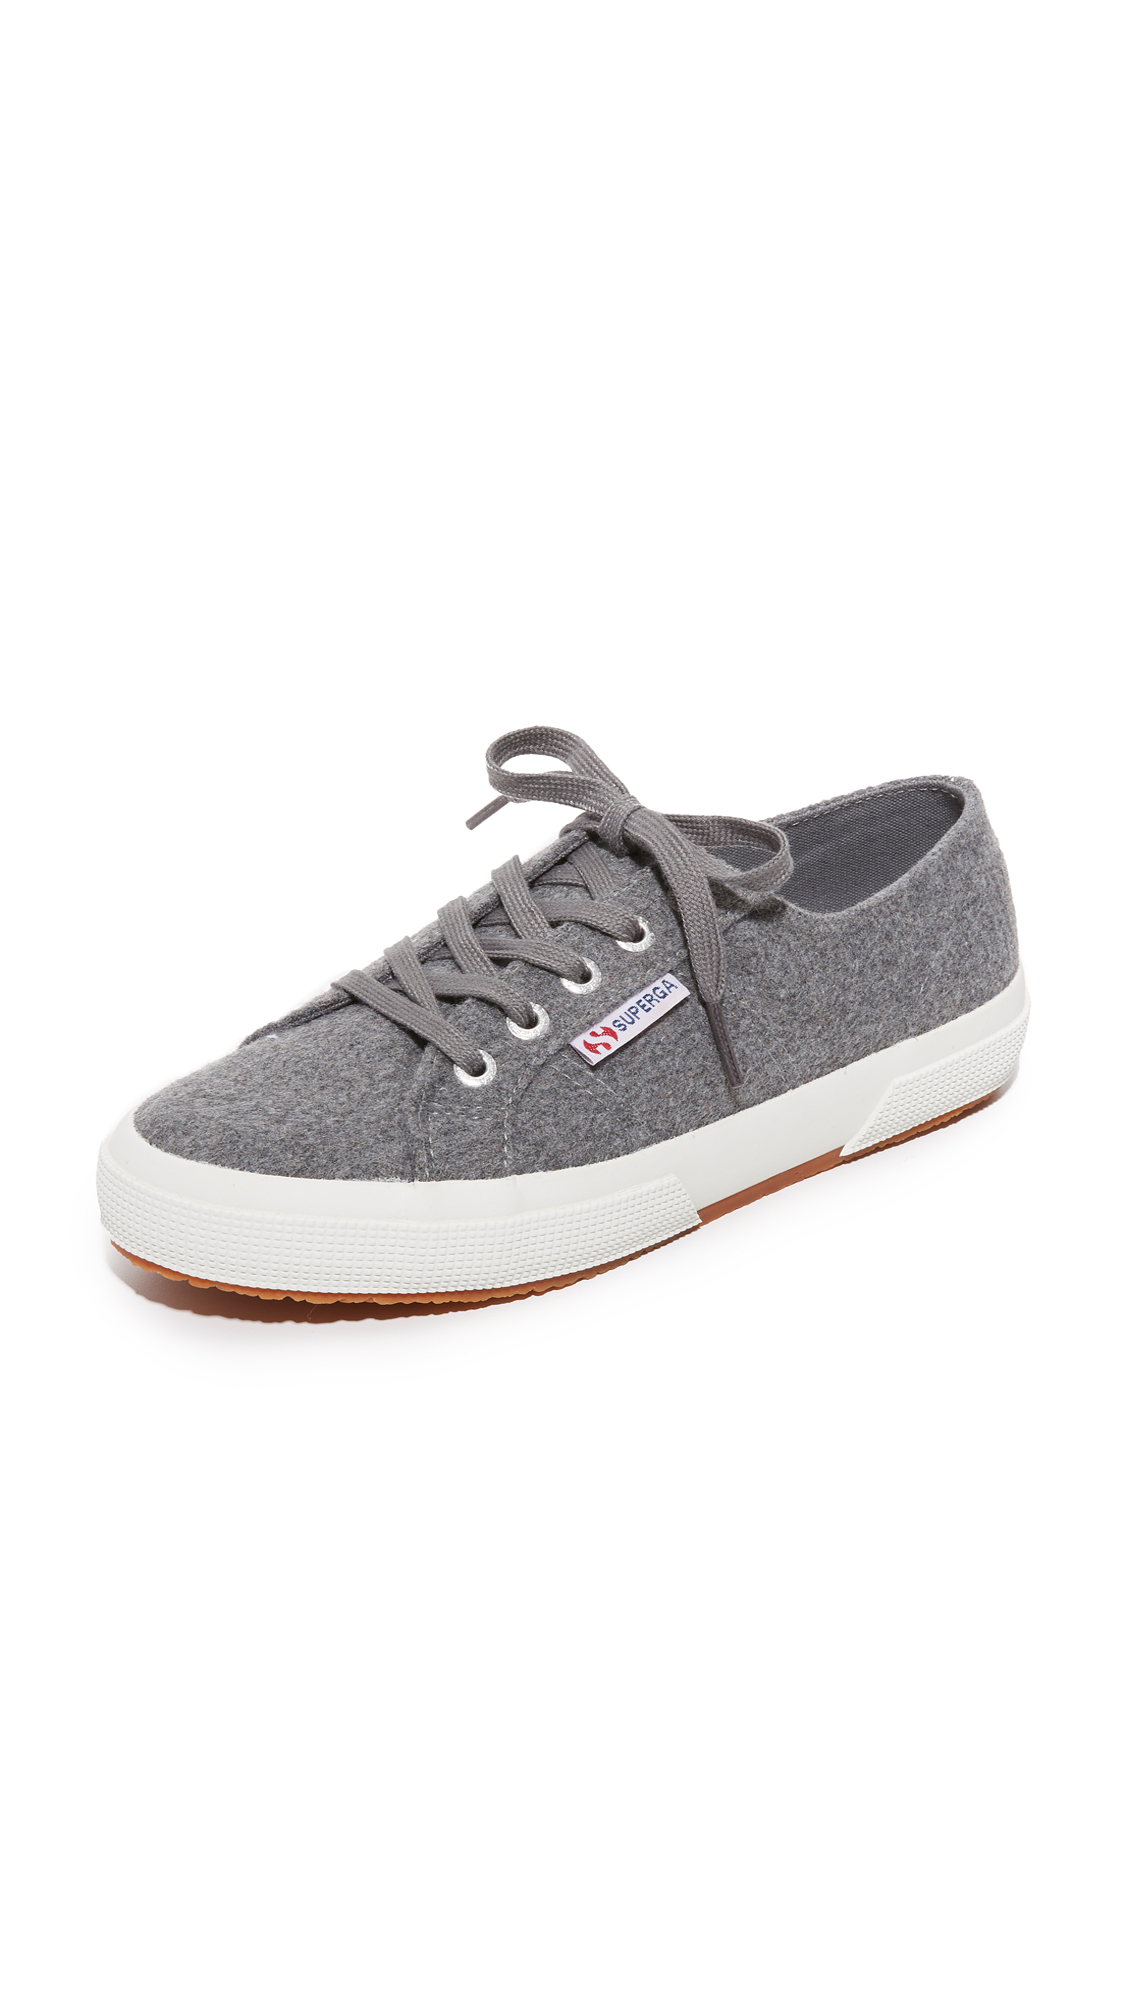 Lyst - Superga 2750 Wool Sneakers in Gray